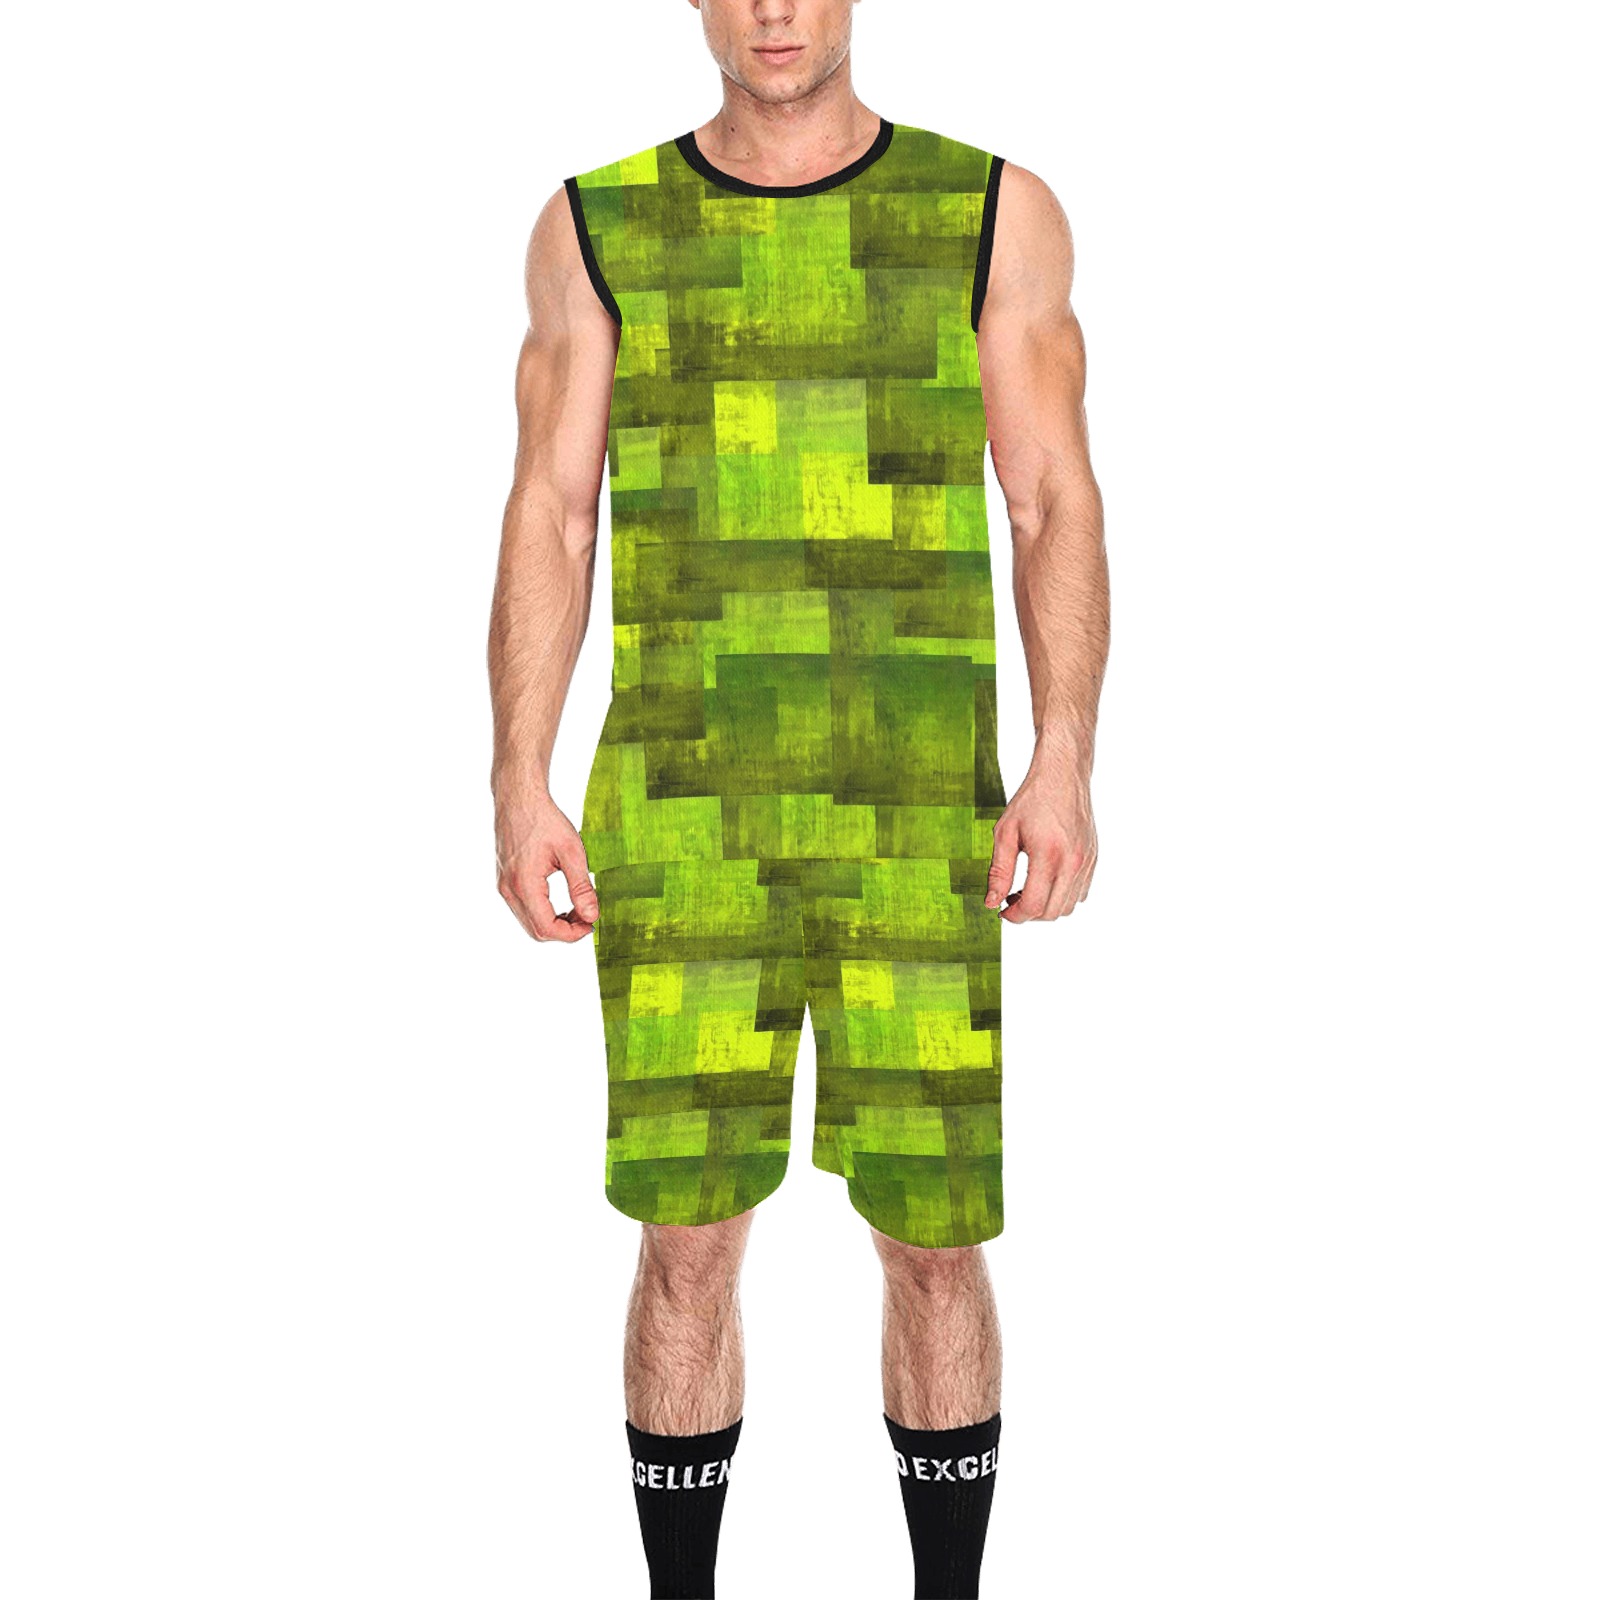 pixels2 green All Over Print Basketball Uniform